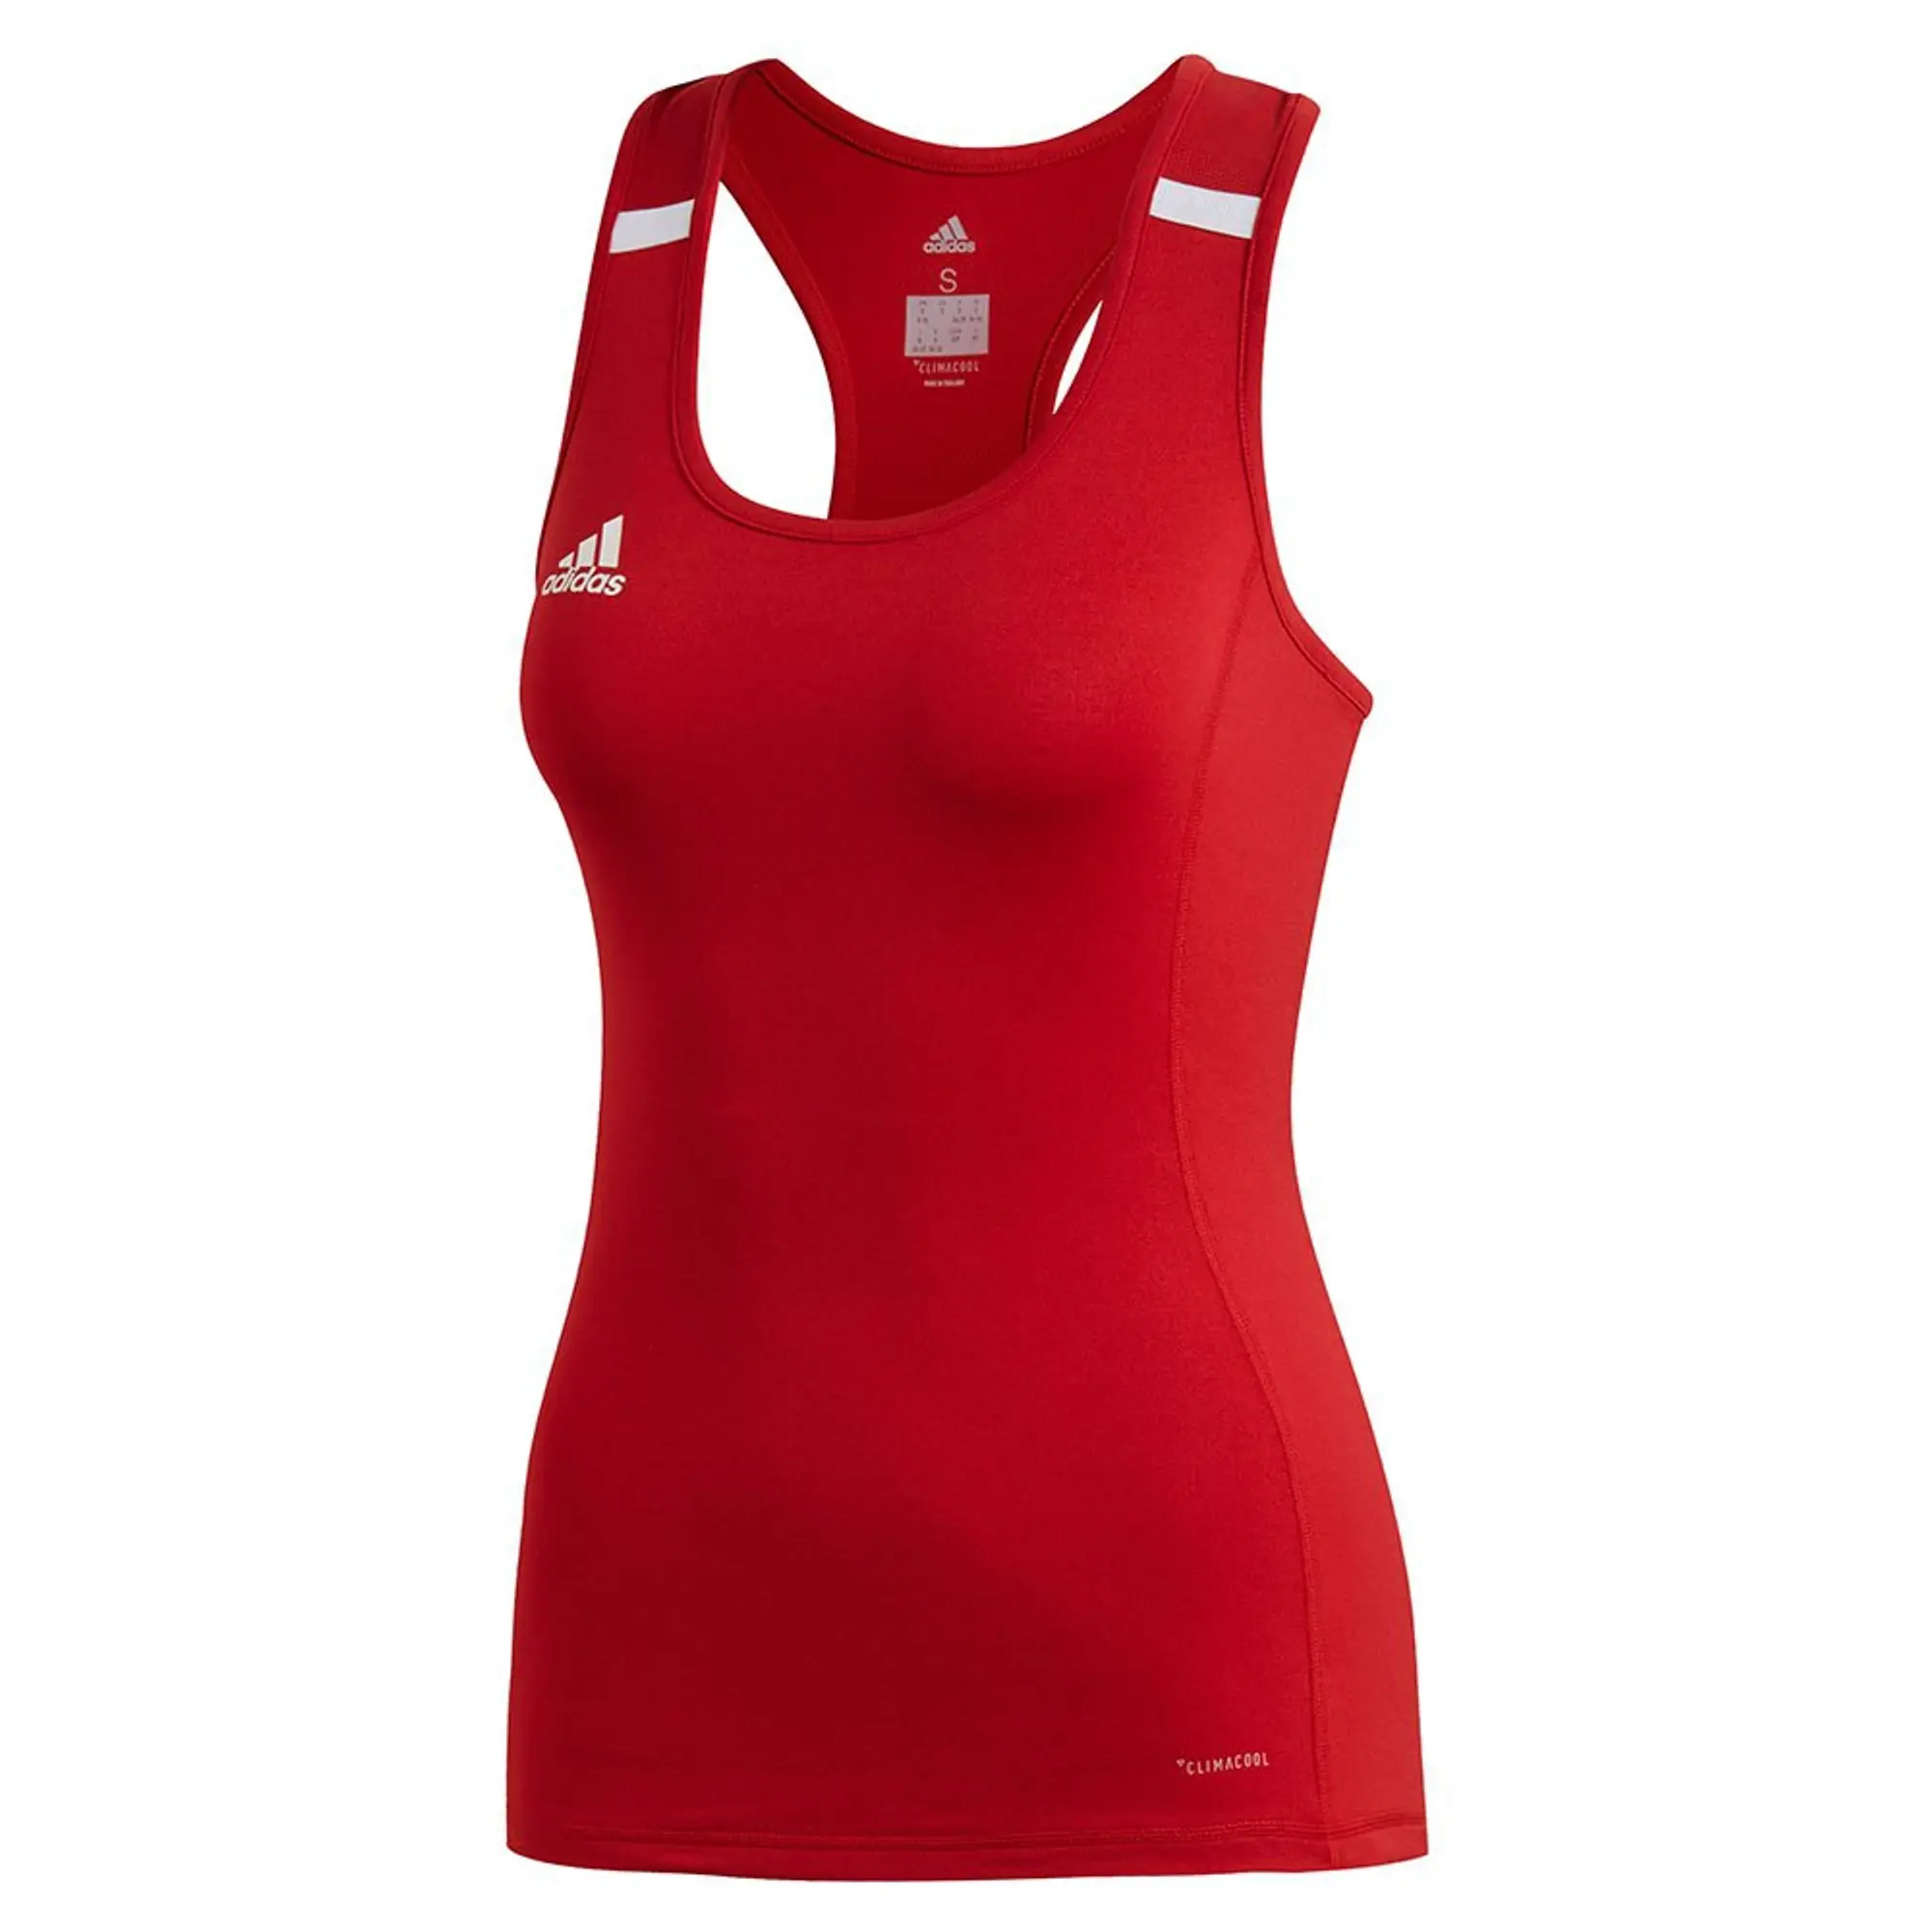 Adidas Badminton Team 19 Sleeveless T-shirt  - Red